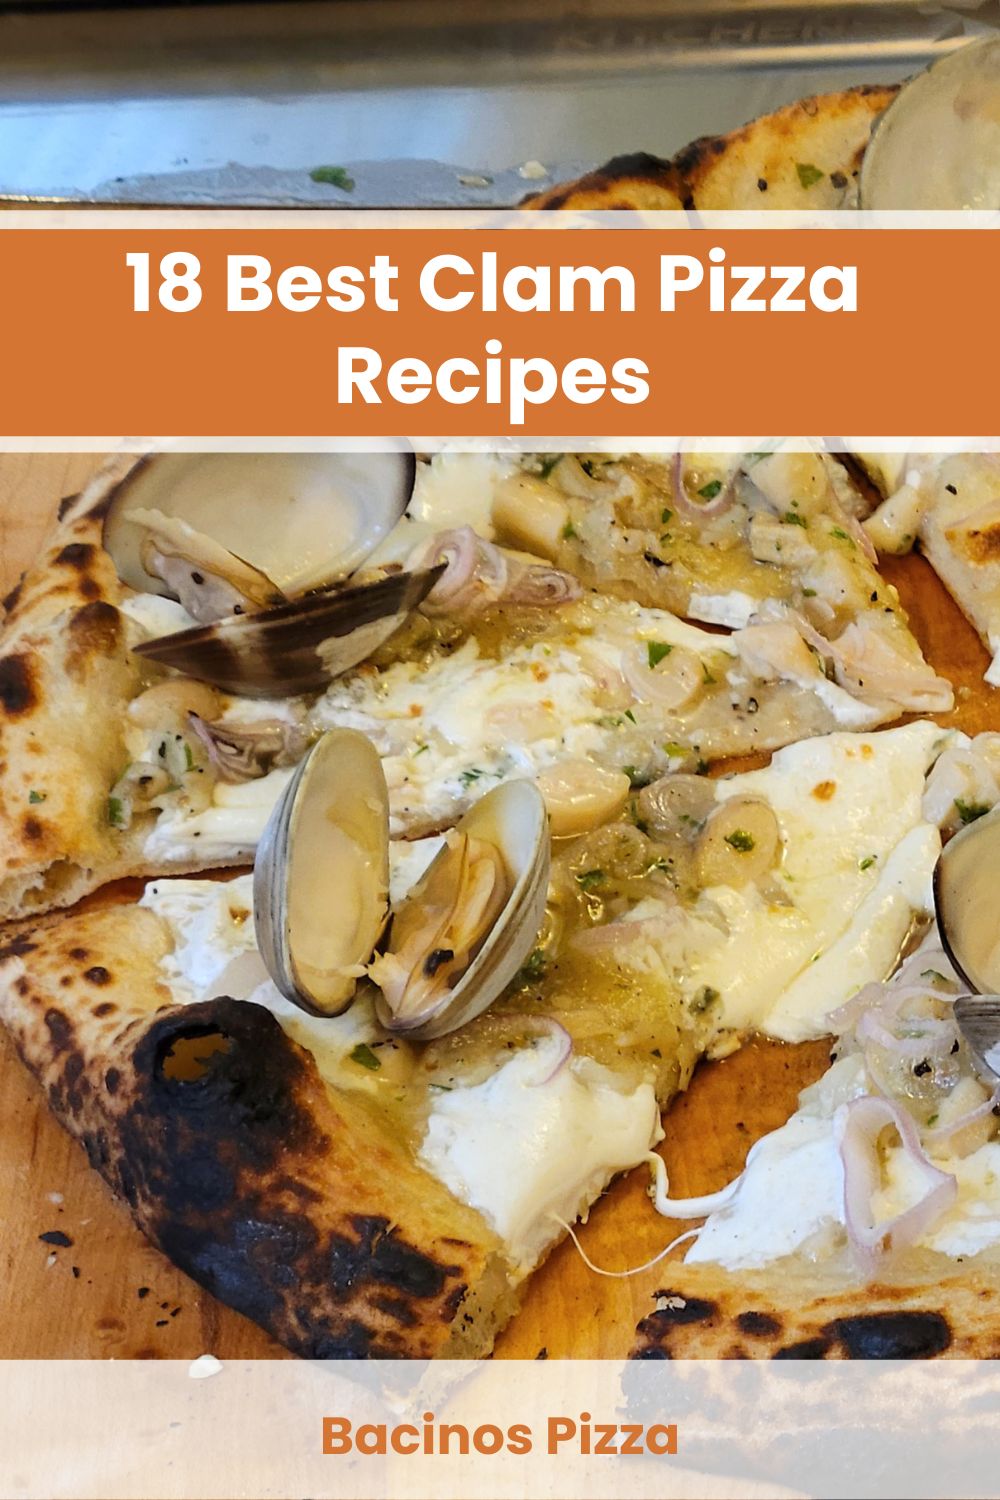 Best Clam Pizza Recipes